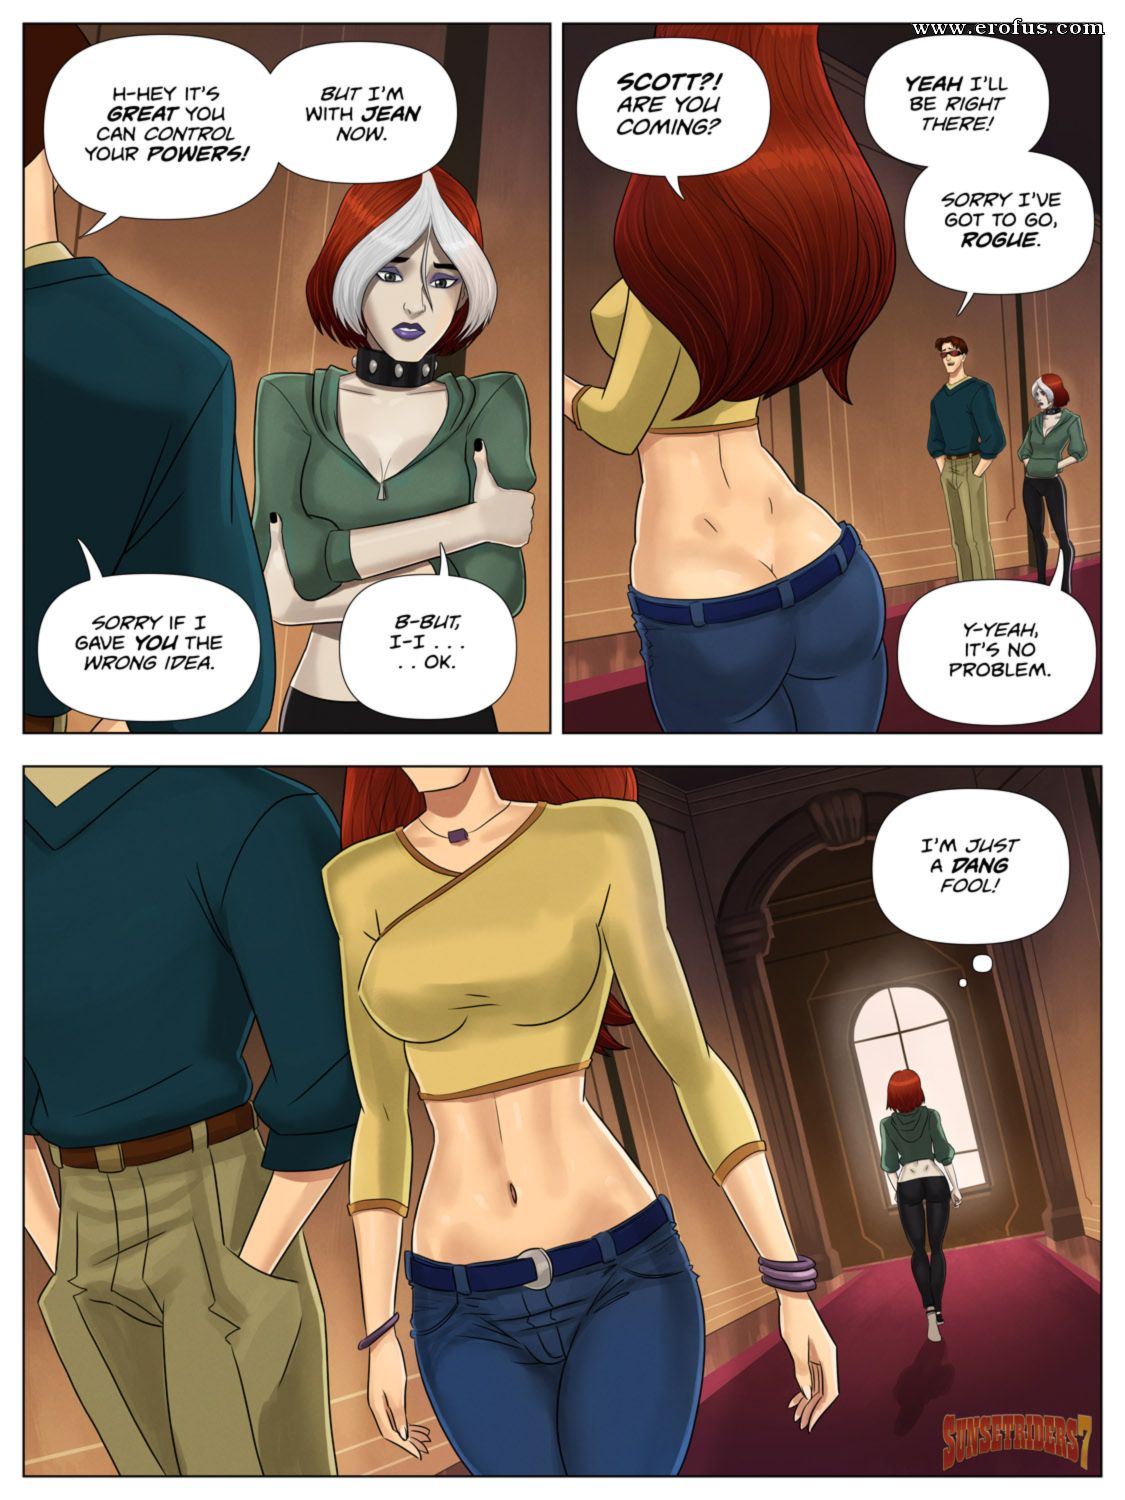 Rogue - Page 11 | sunsetriders7-comics/rogue-lust-powerslave ...